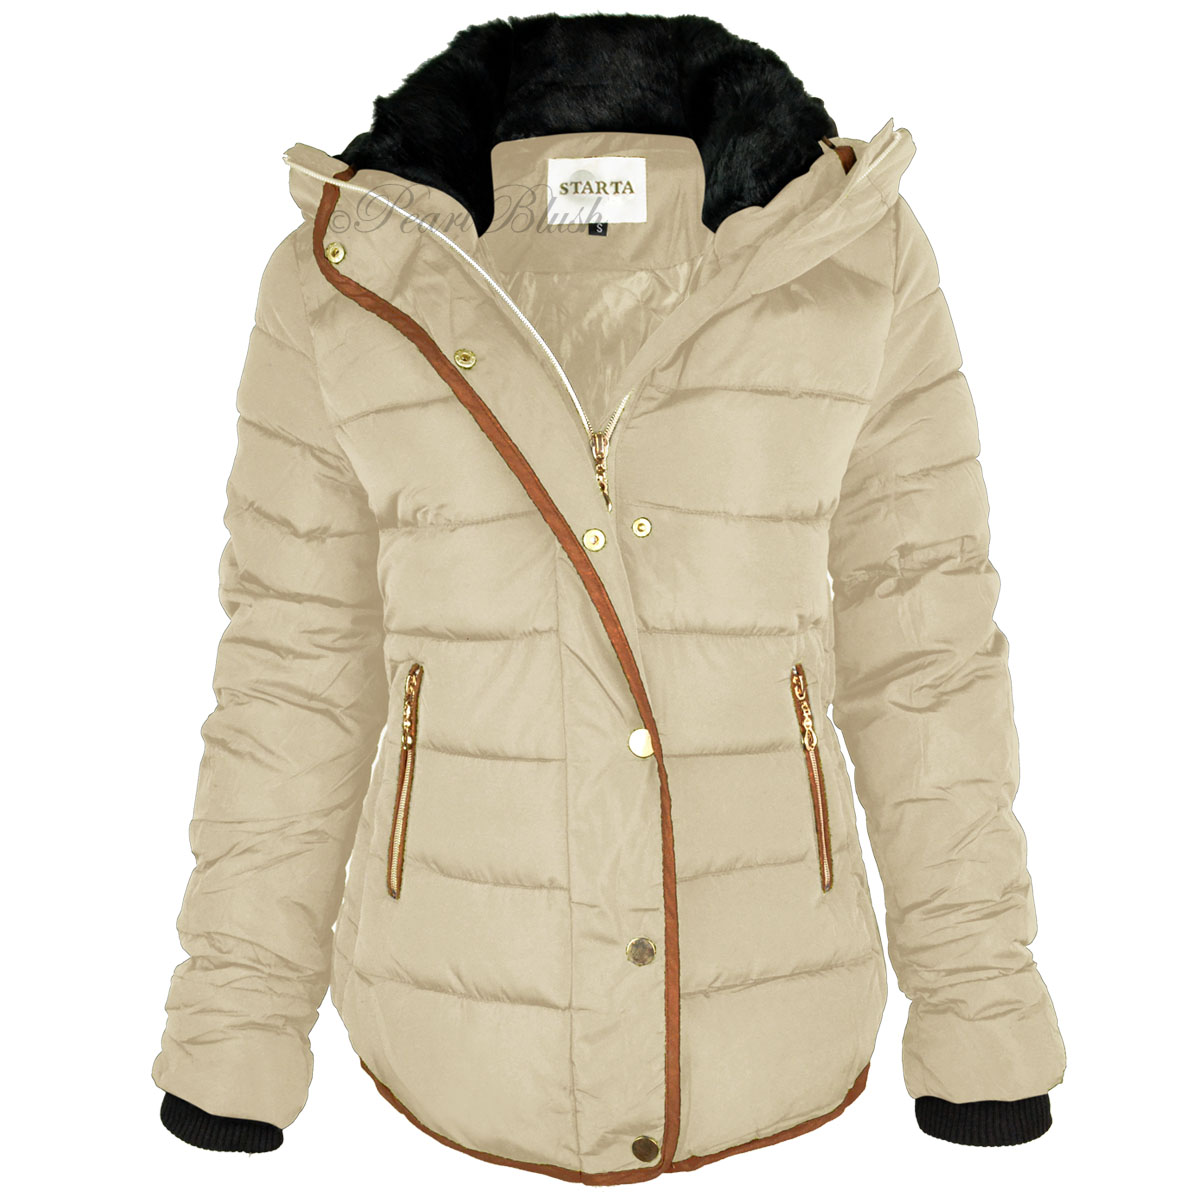 Womens Winter Coats With Fur Hoods Uk - Tradingbasis